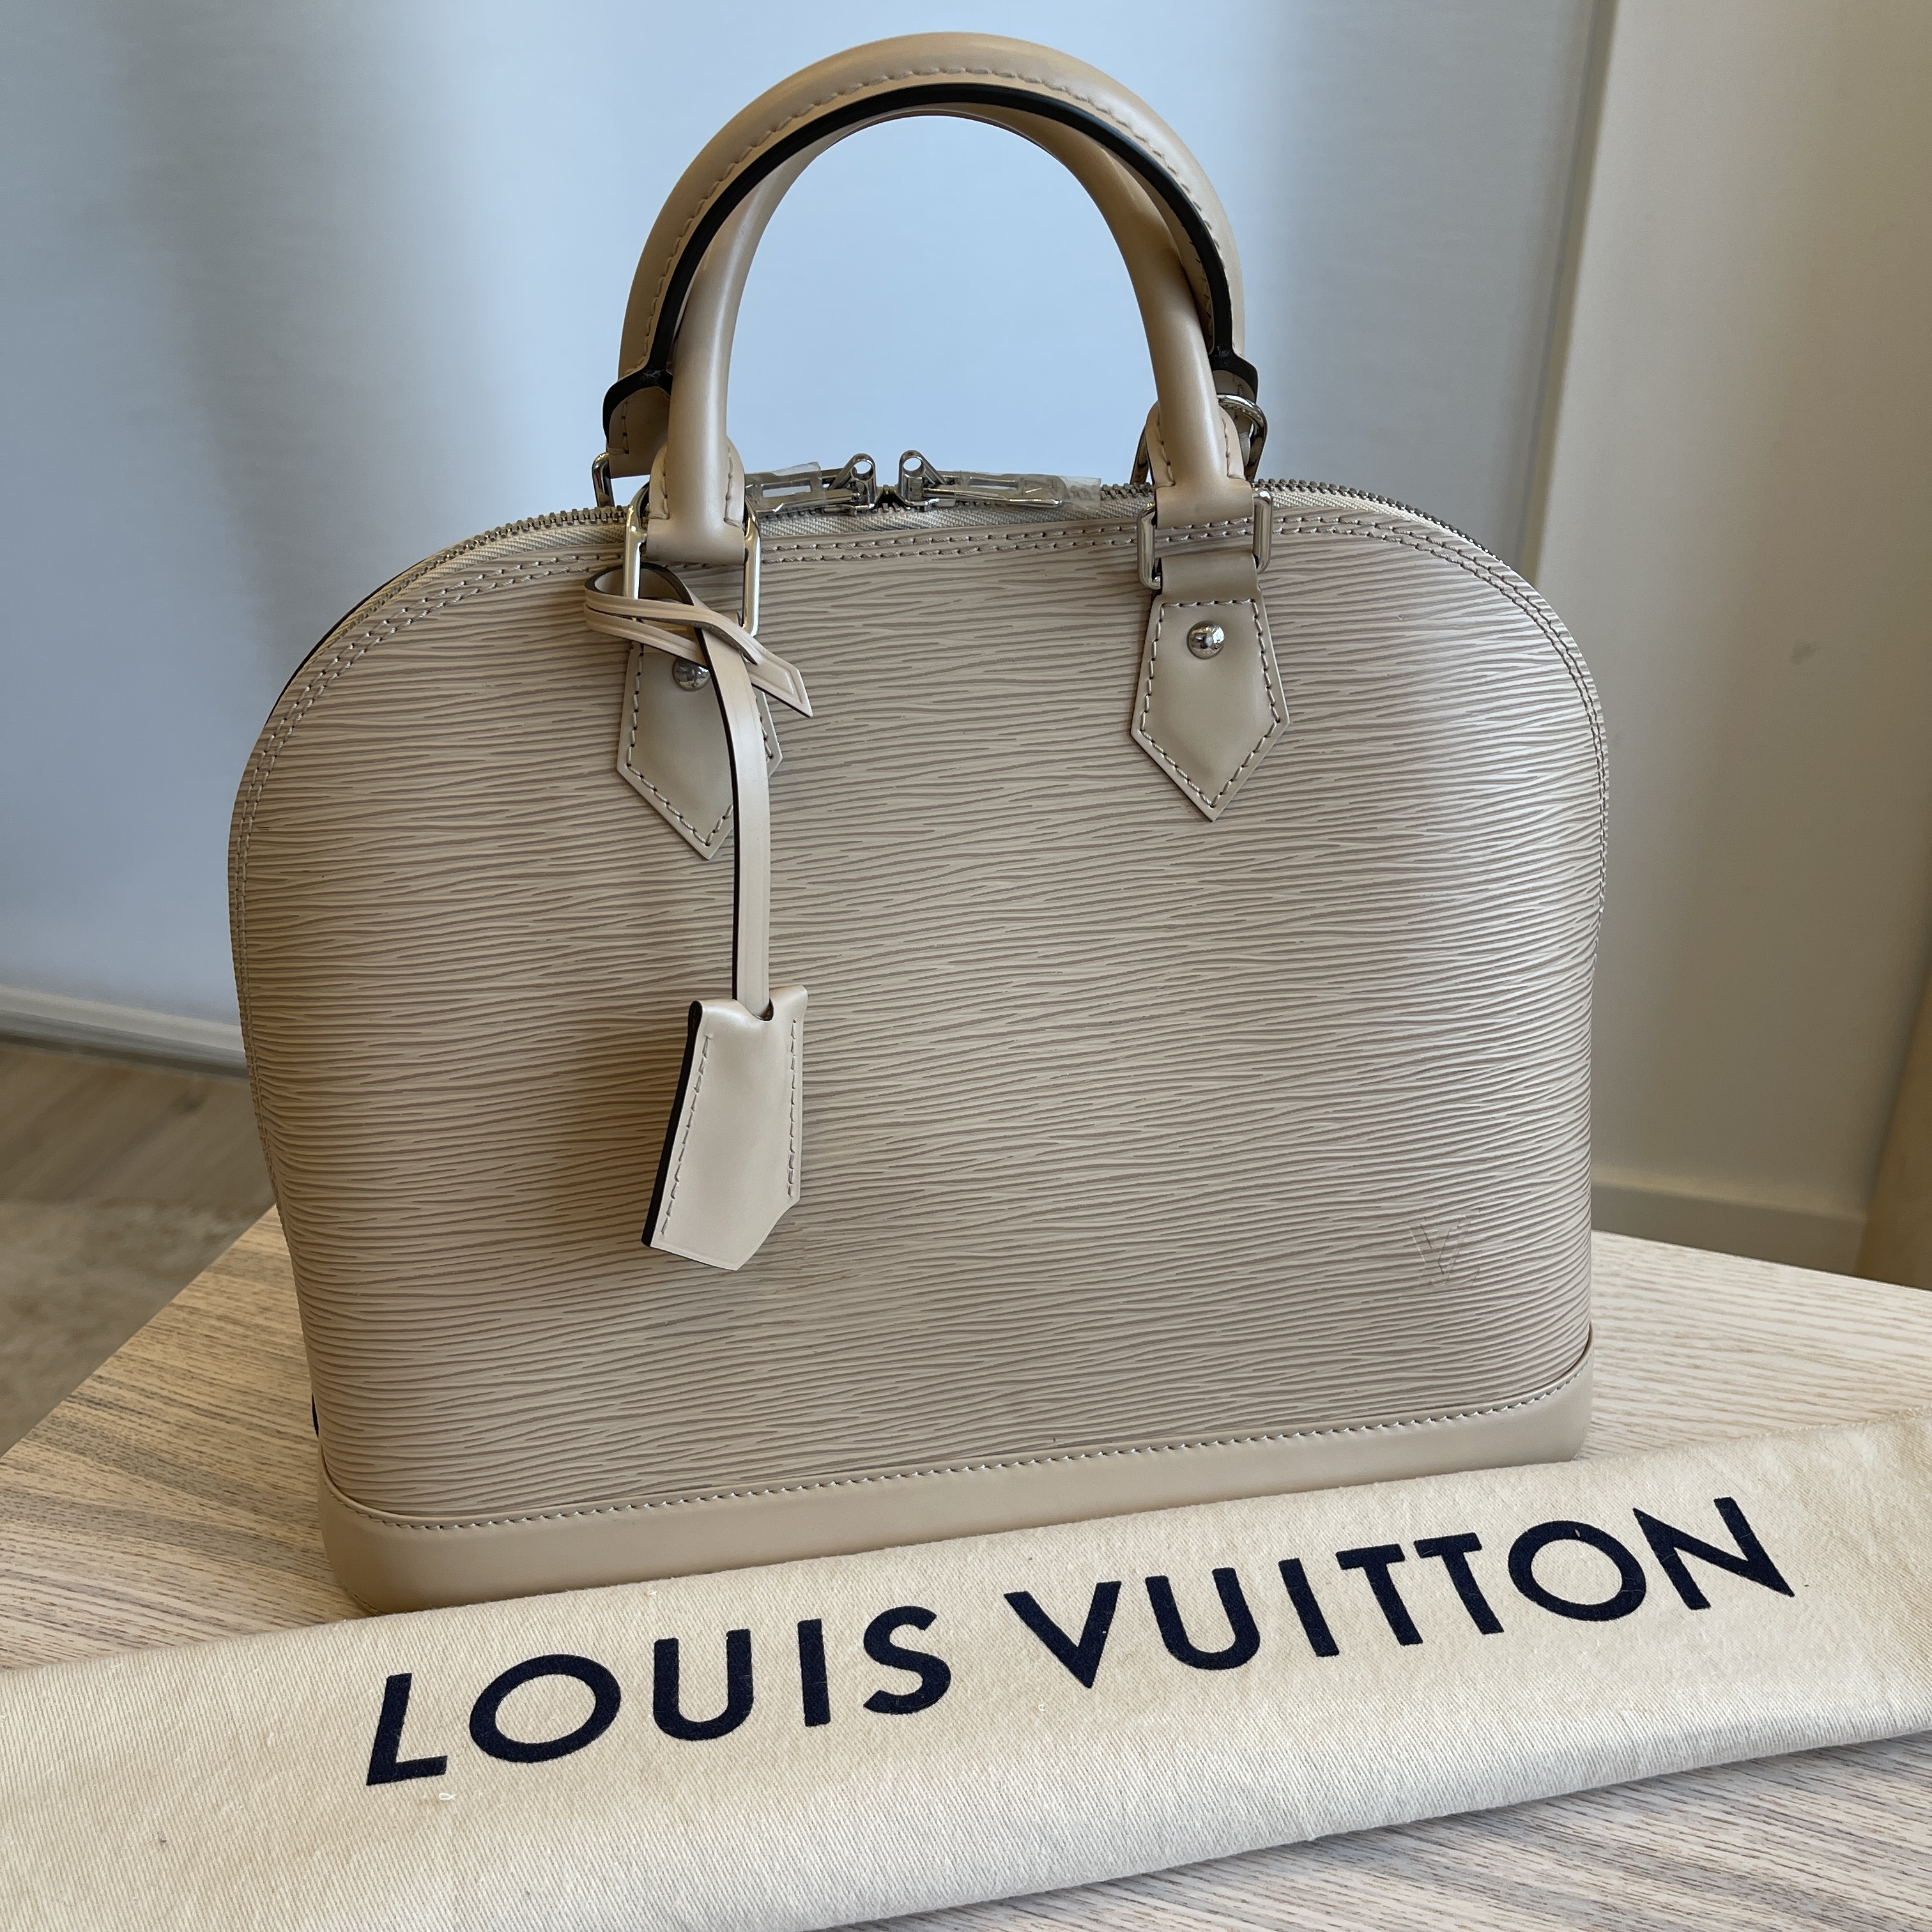 Review : Louis Vuitton Alma PM in Epi Leather 